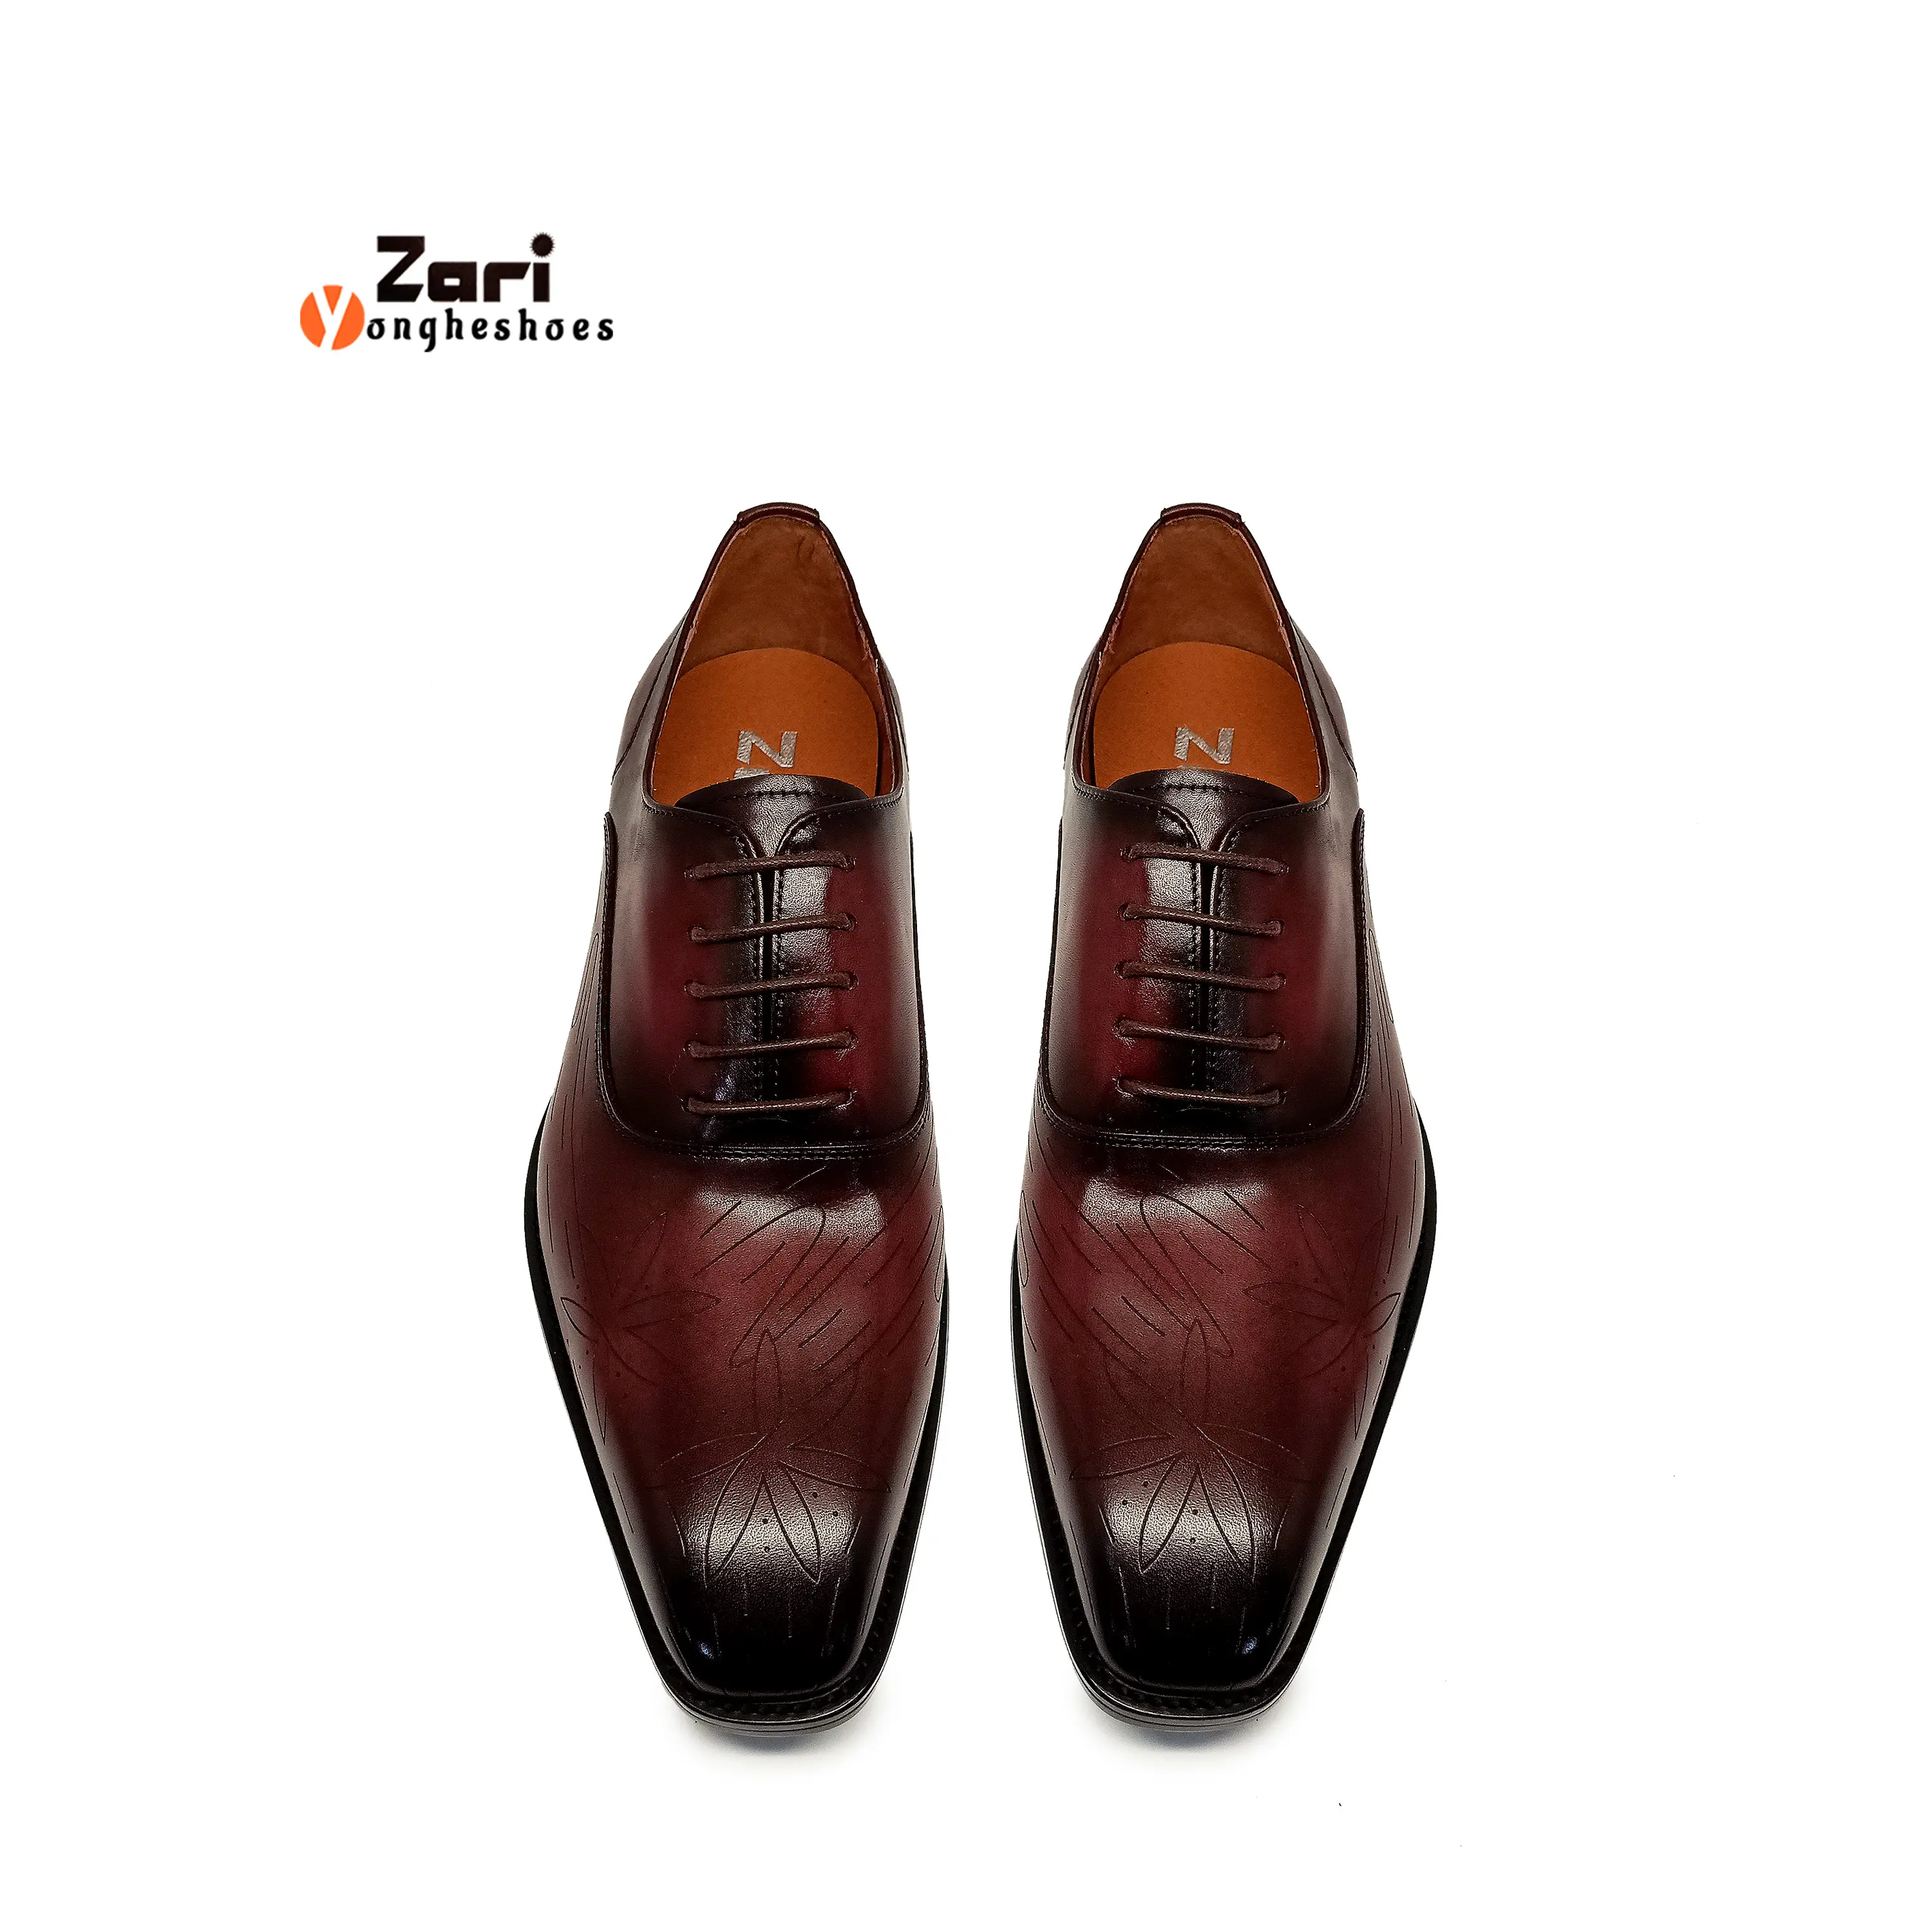 Zari good quality calzado masculino men slip laser leather shoes dress man oxford